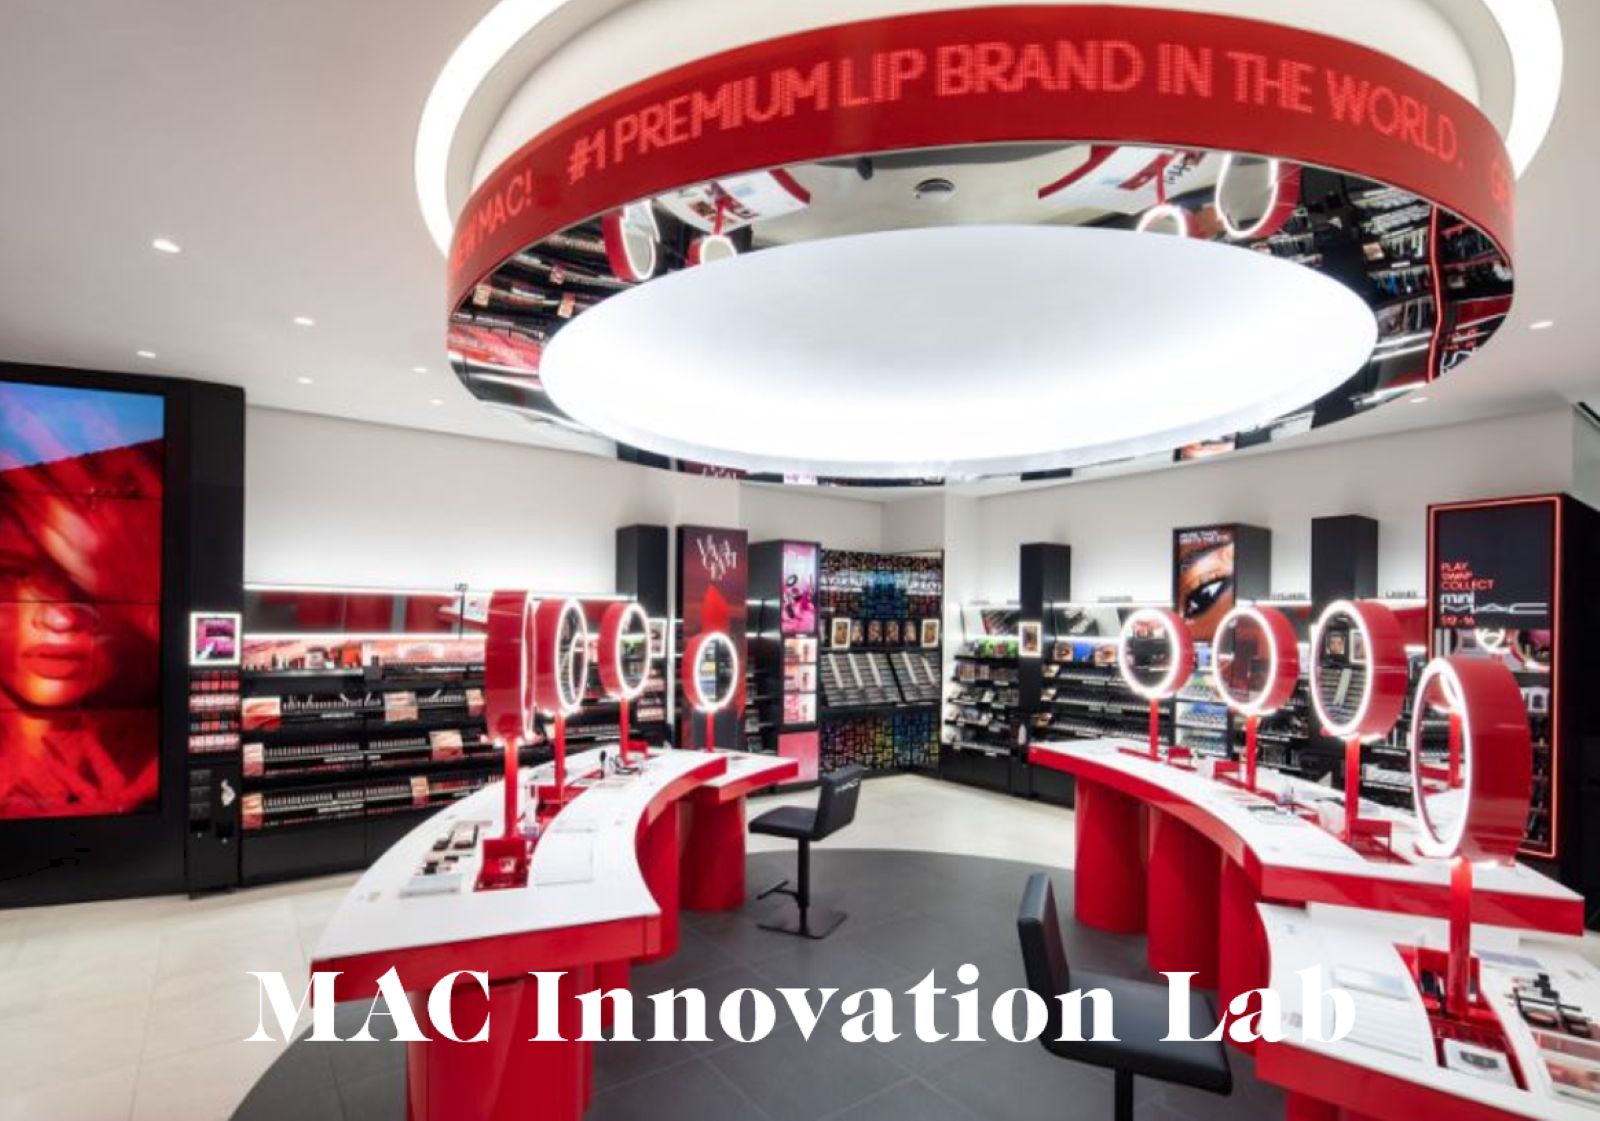 Mac cosmetics innovation lab retail tour beauté missions mmm 0